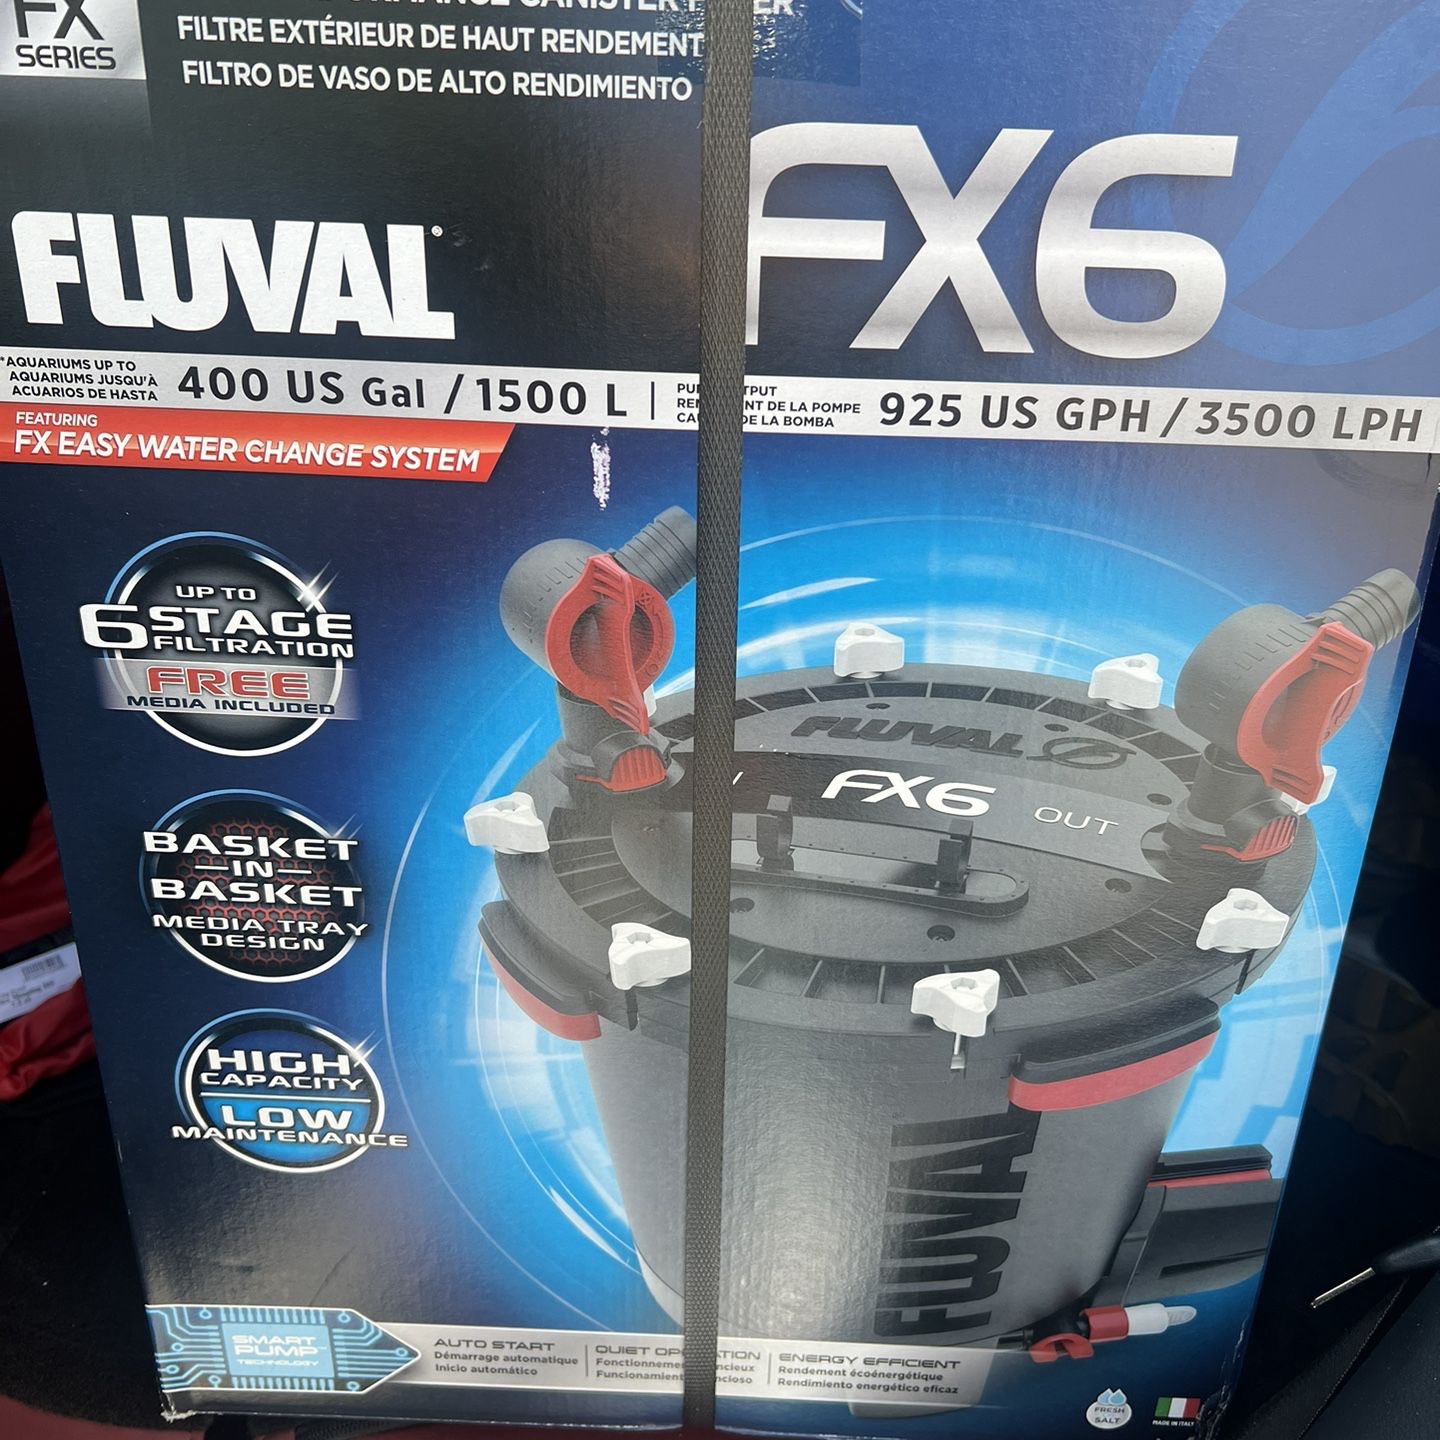 FLUVAL FX6 High Performance Canister Filter